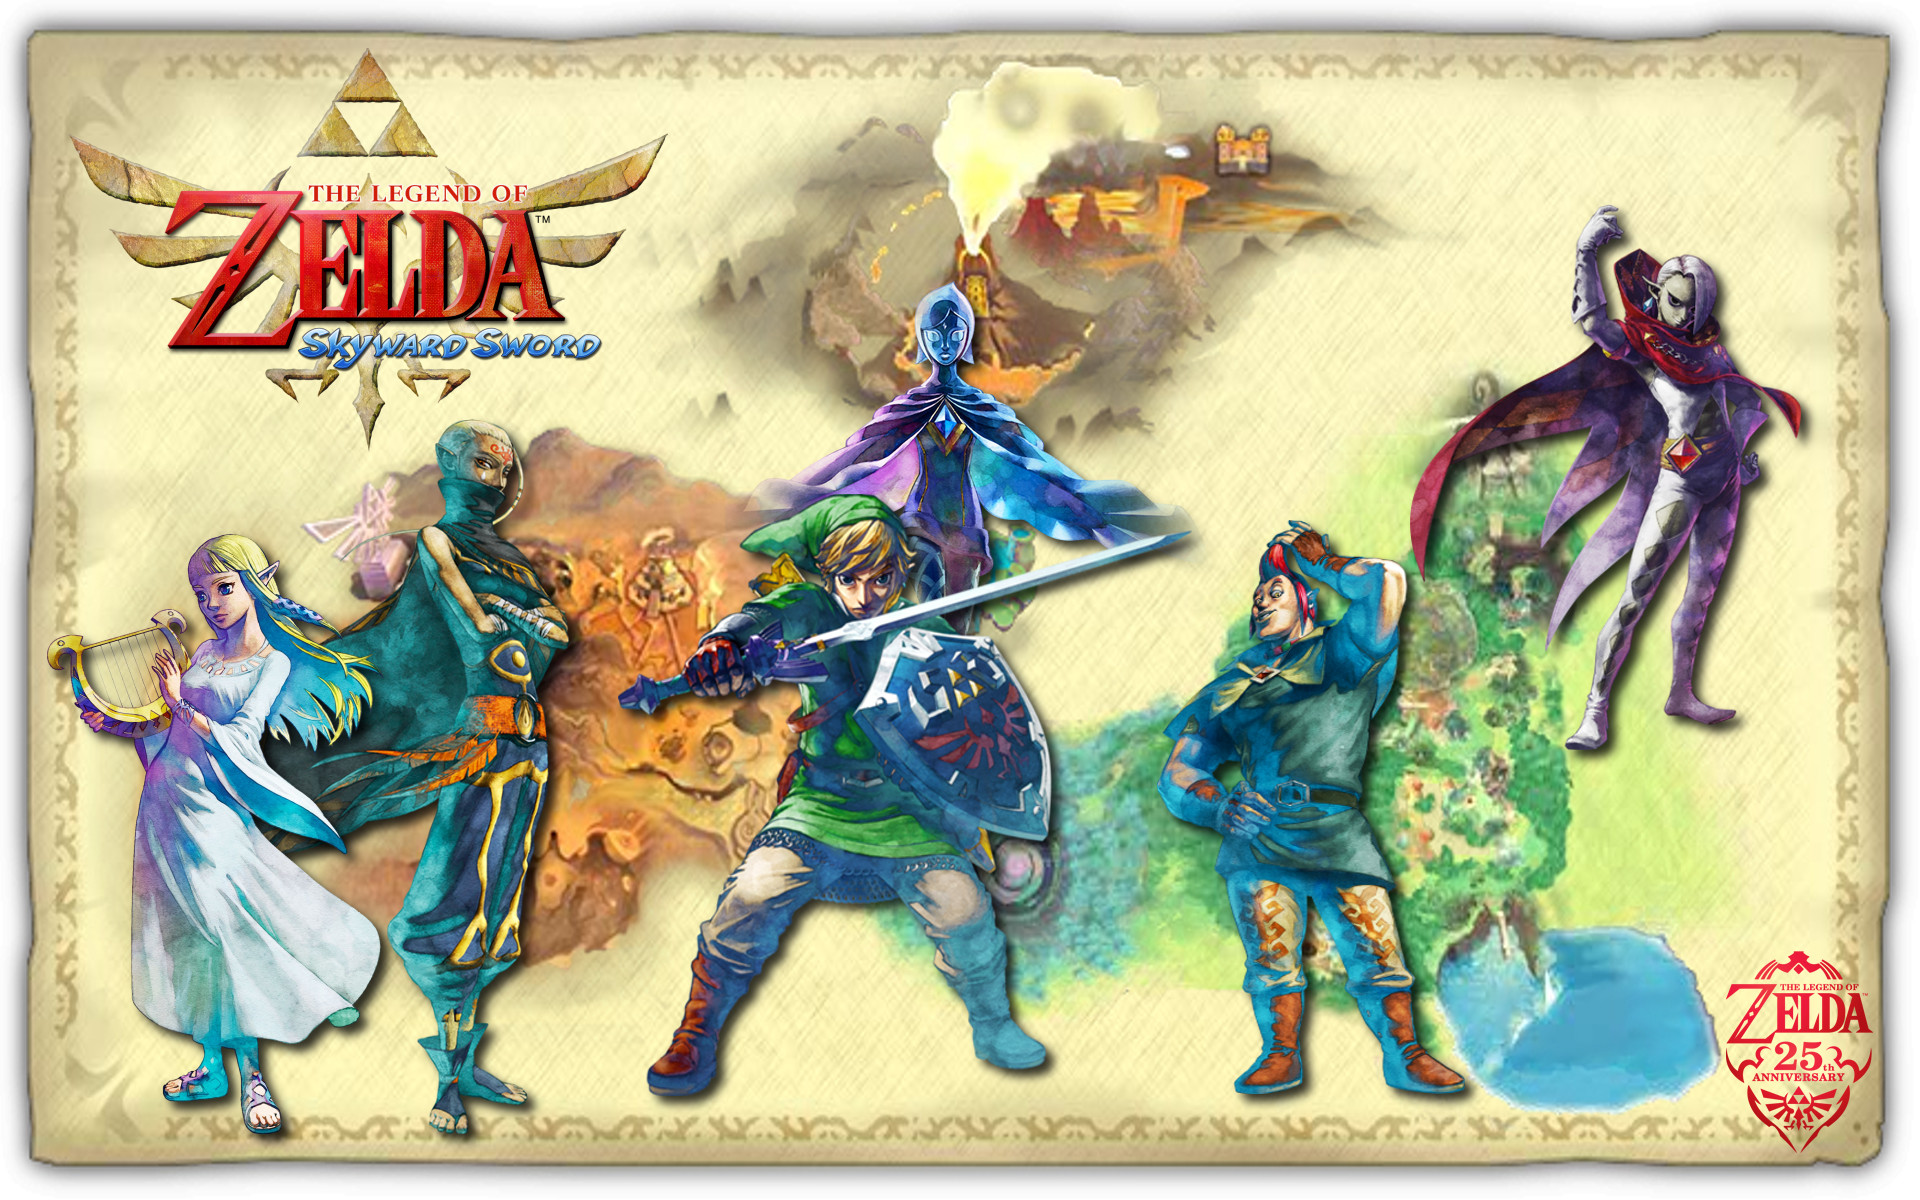 1920x1200 ... Legend of Zelda: Skyward Sword wallpaper (remake) by StellaTheCat12